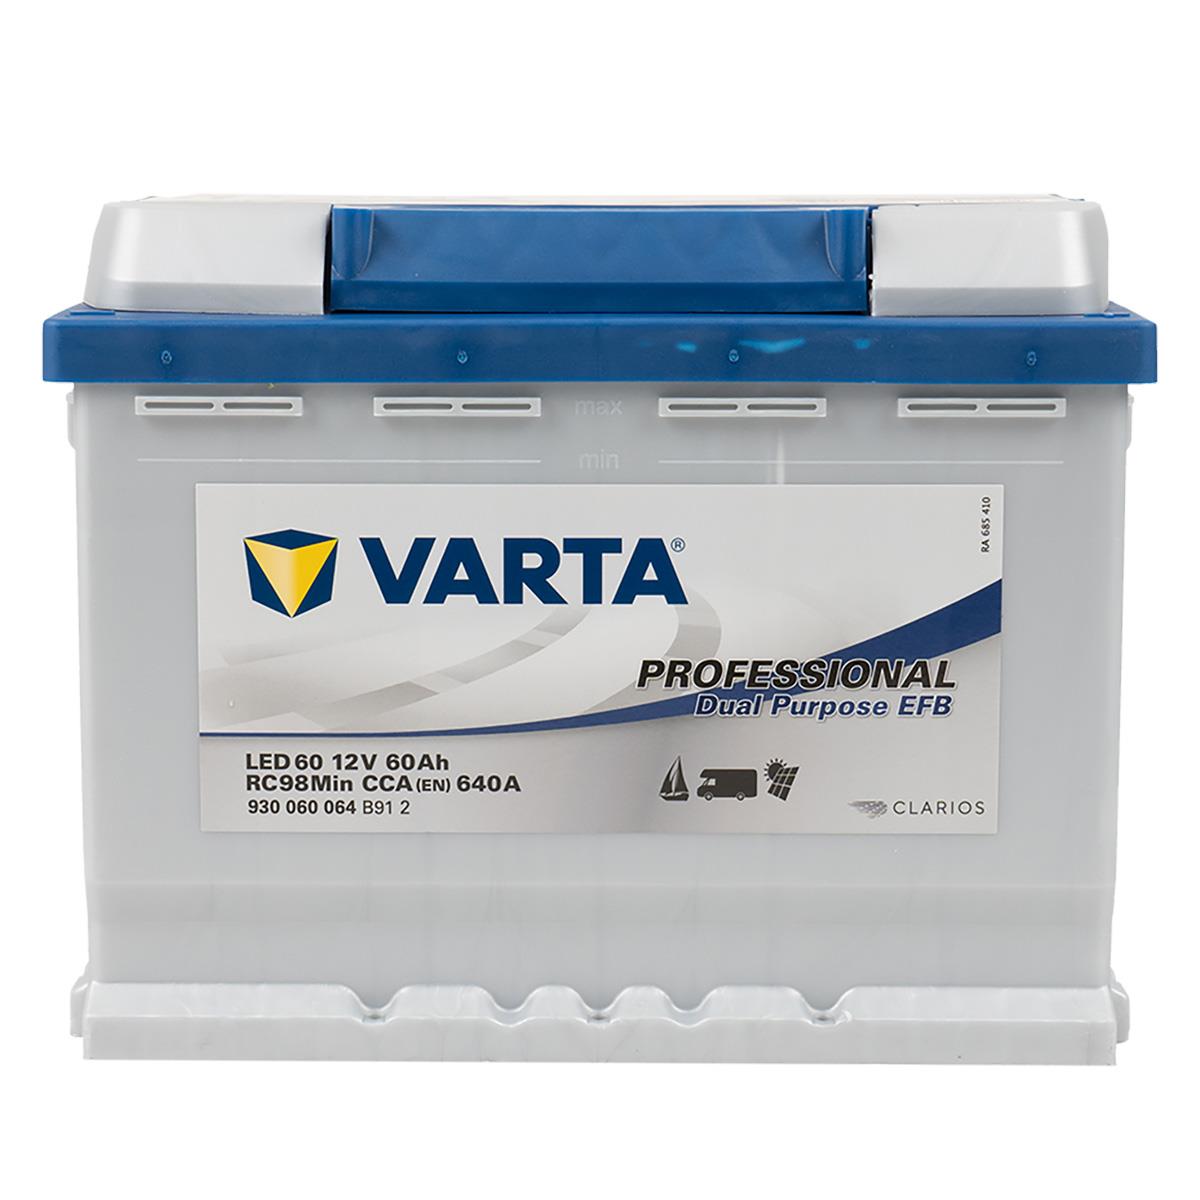 Varta LED60 Professional EFB 12V 60Ah 680A EFB 930 060 068, Versorgungsbatterie, Caravan, Batterien für